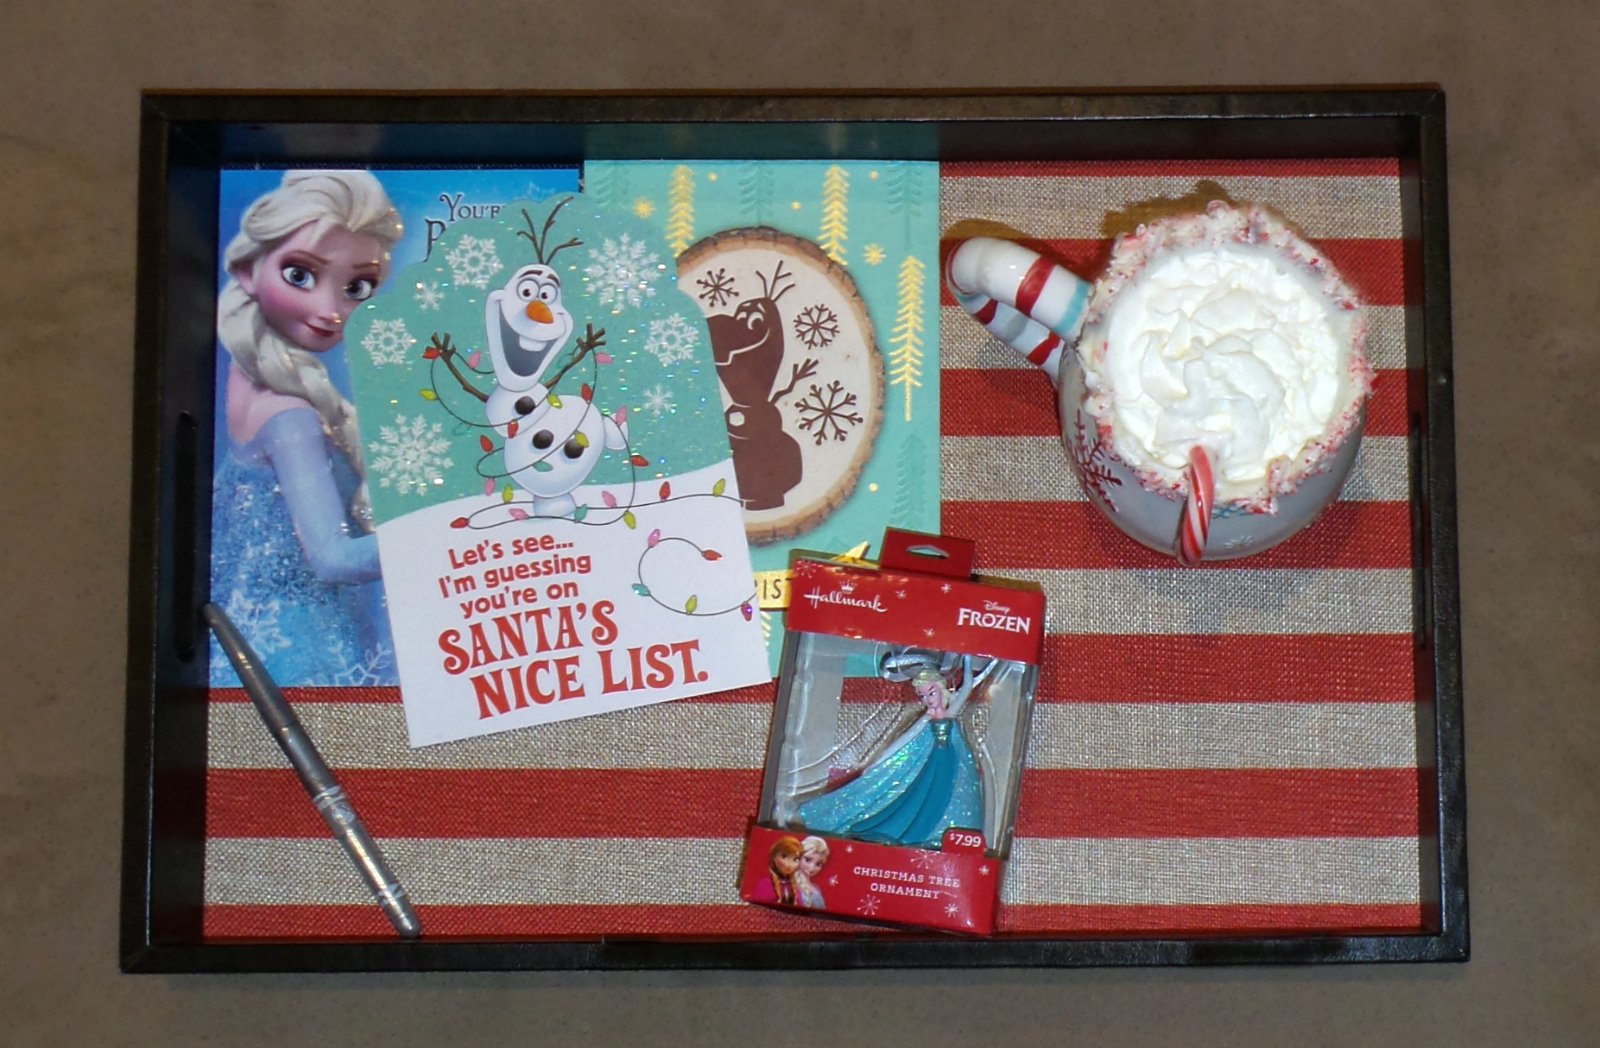 Hallmark Frozen themed holiday cards.